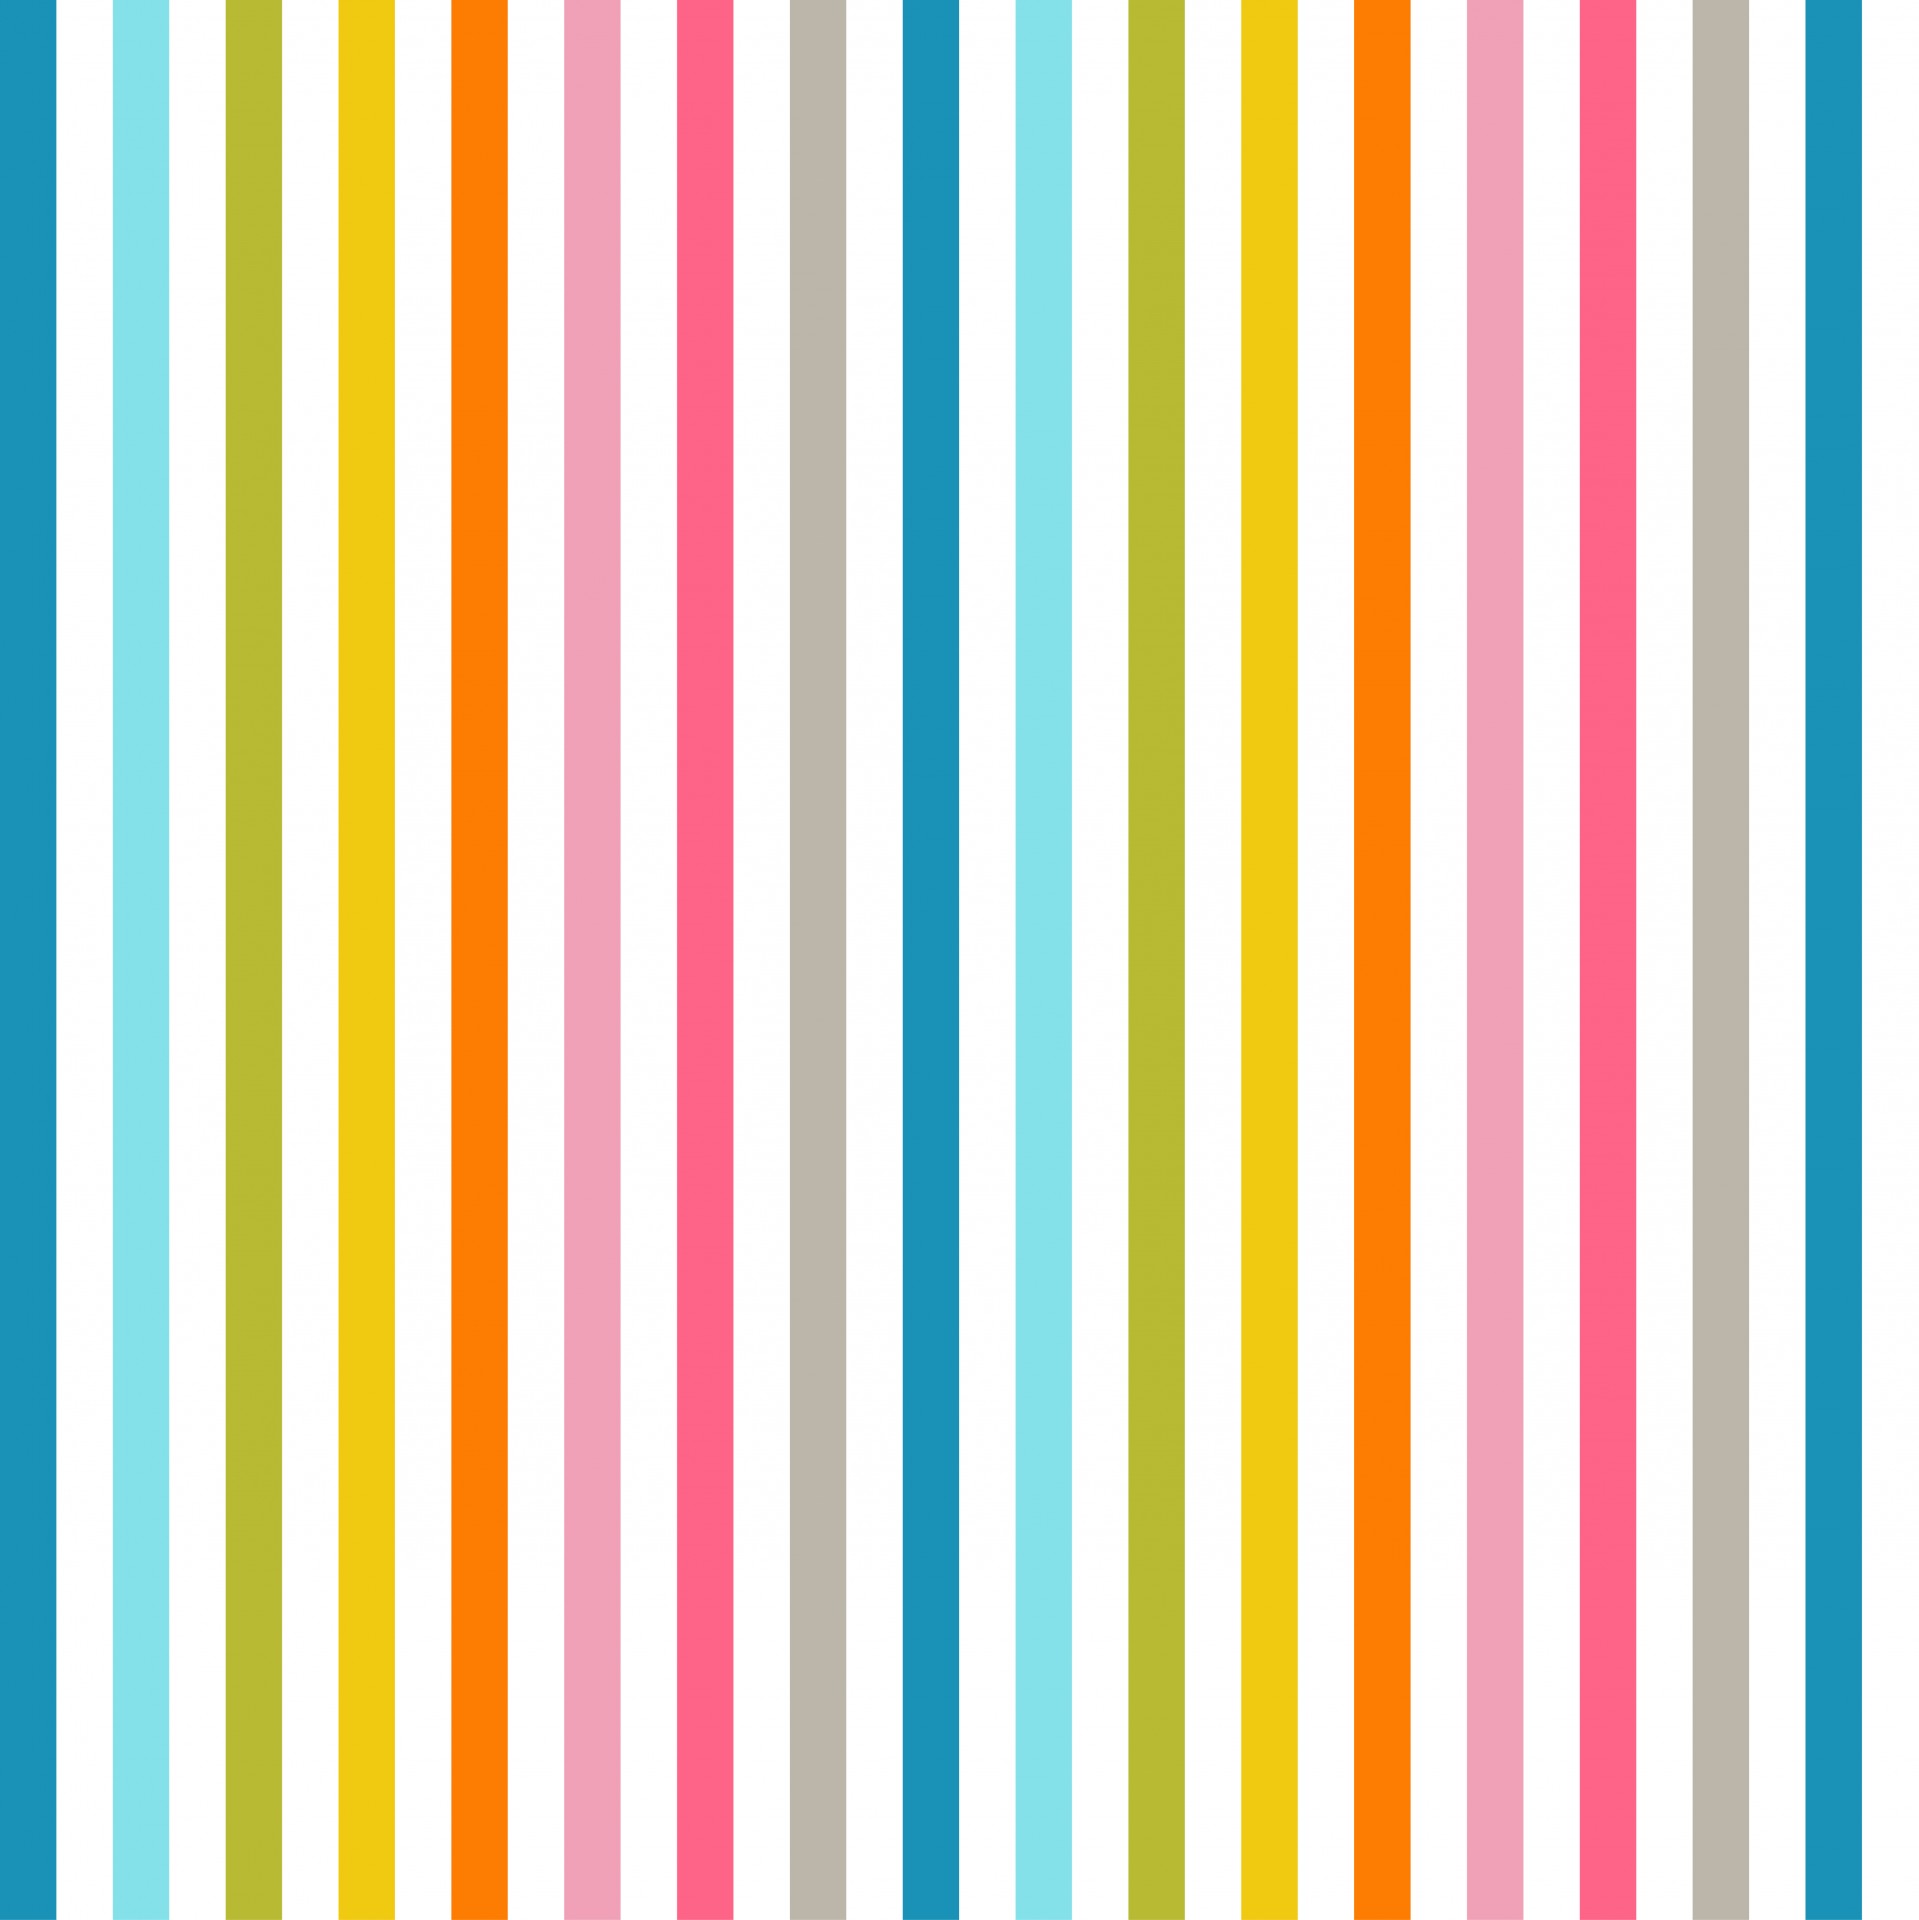 Colorful Stripes Wallpaper by linuslundahl on DeviantArt